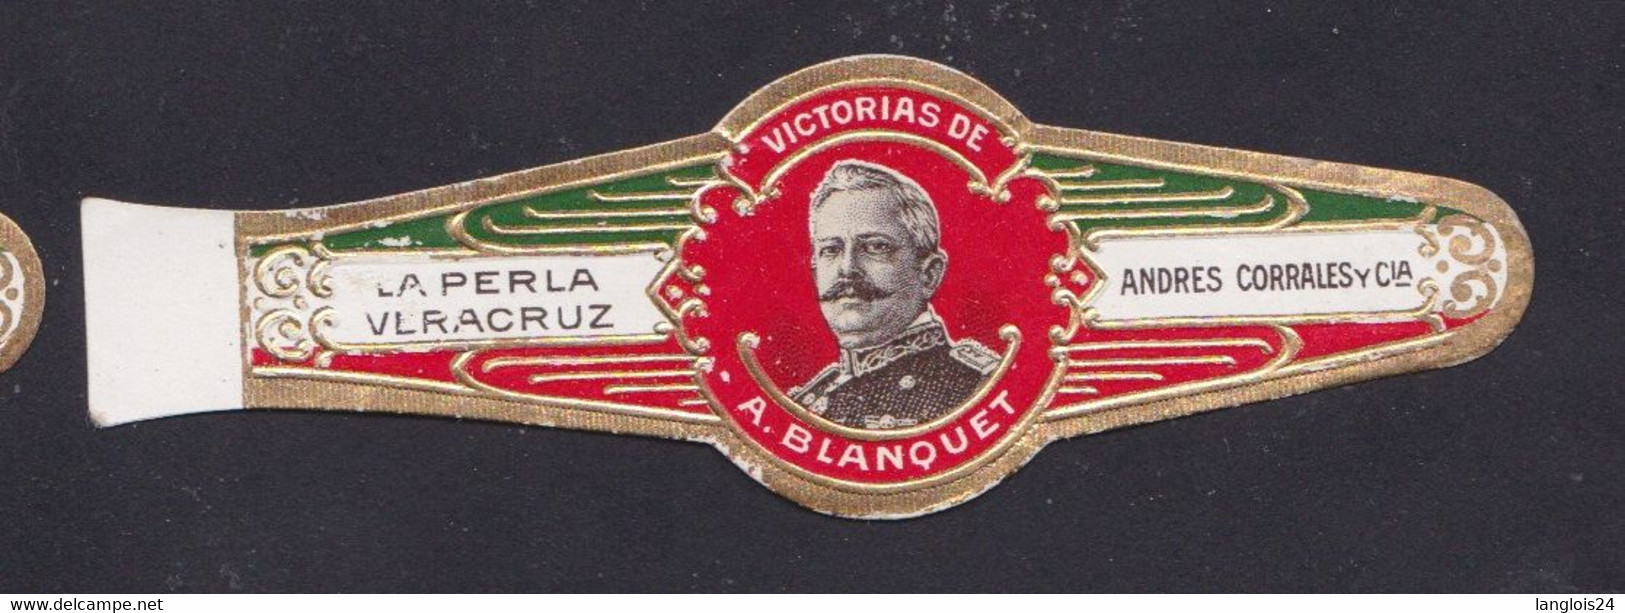 Ancienne Bague De Cigare Vitola B177 Homme Blanquet - Bauchbinden (Zigarrenringe)